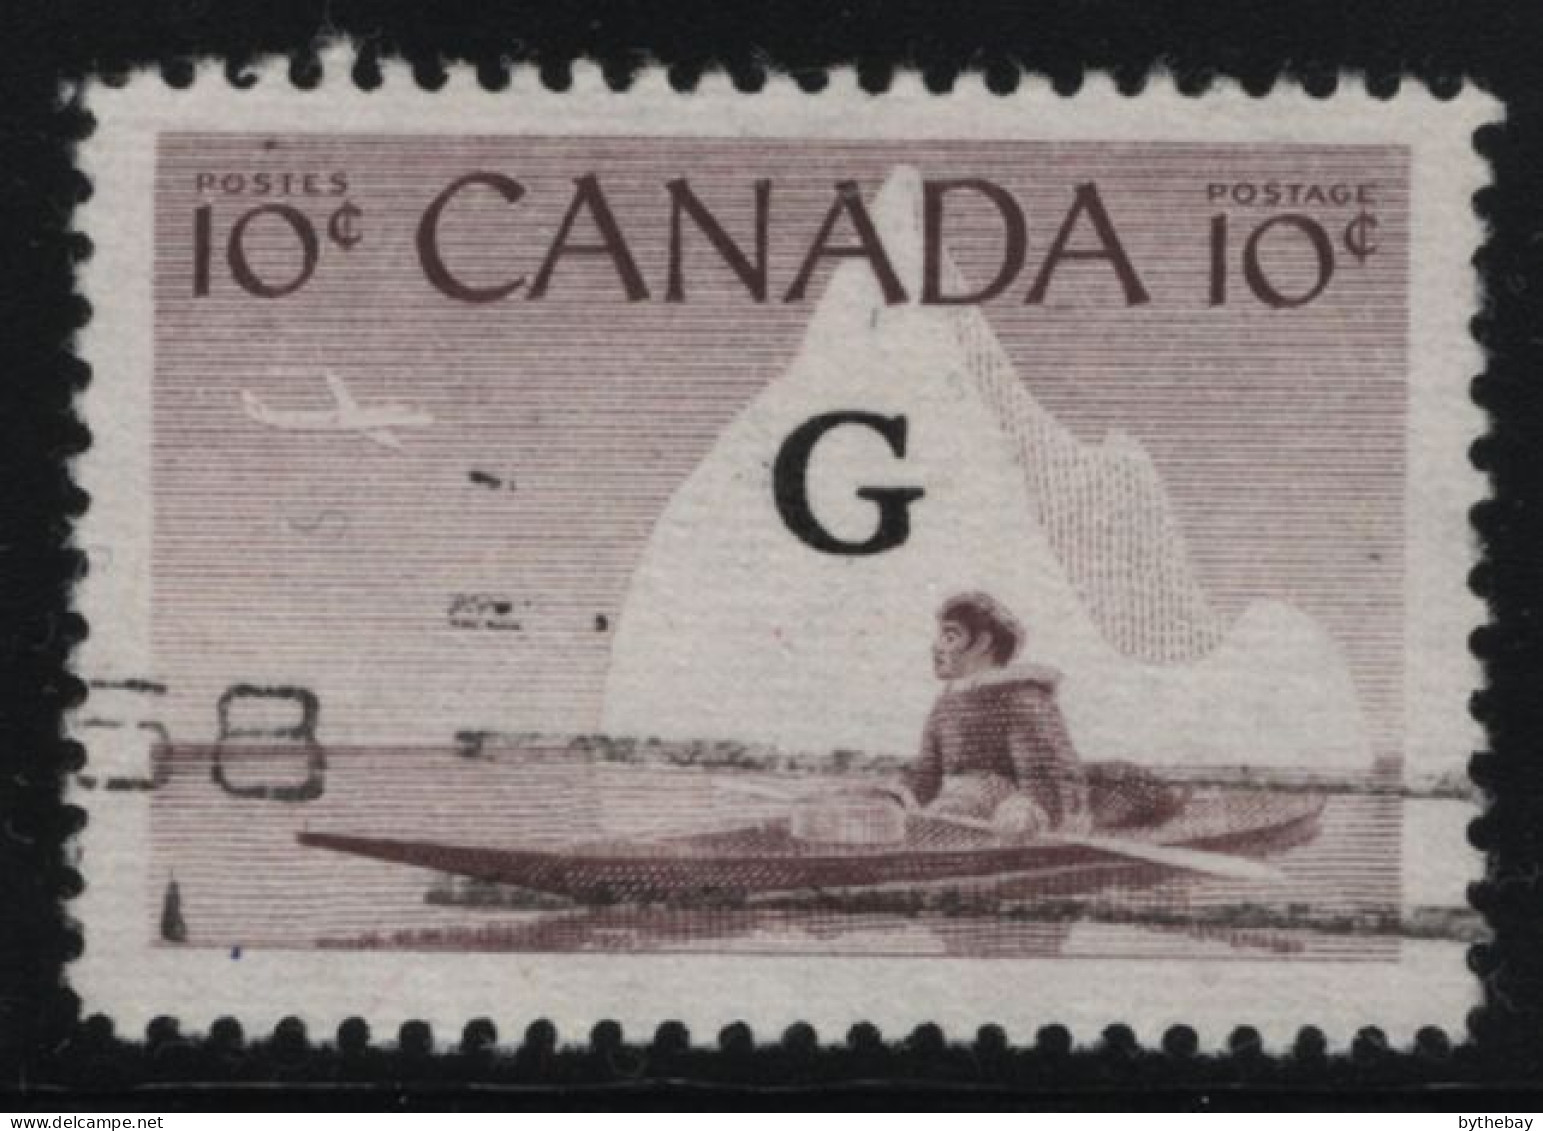 Canada 1953-55 Used Sc O39 10c Inuk, Kayak G Overprint - Opdrukken